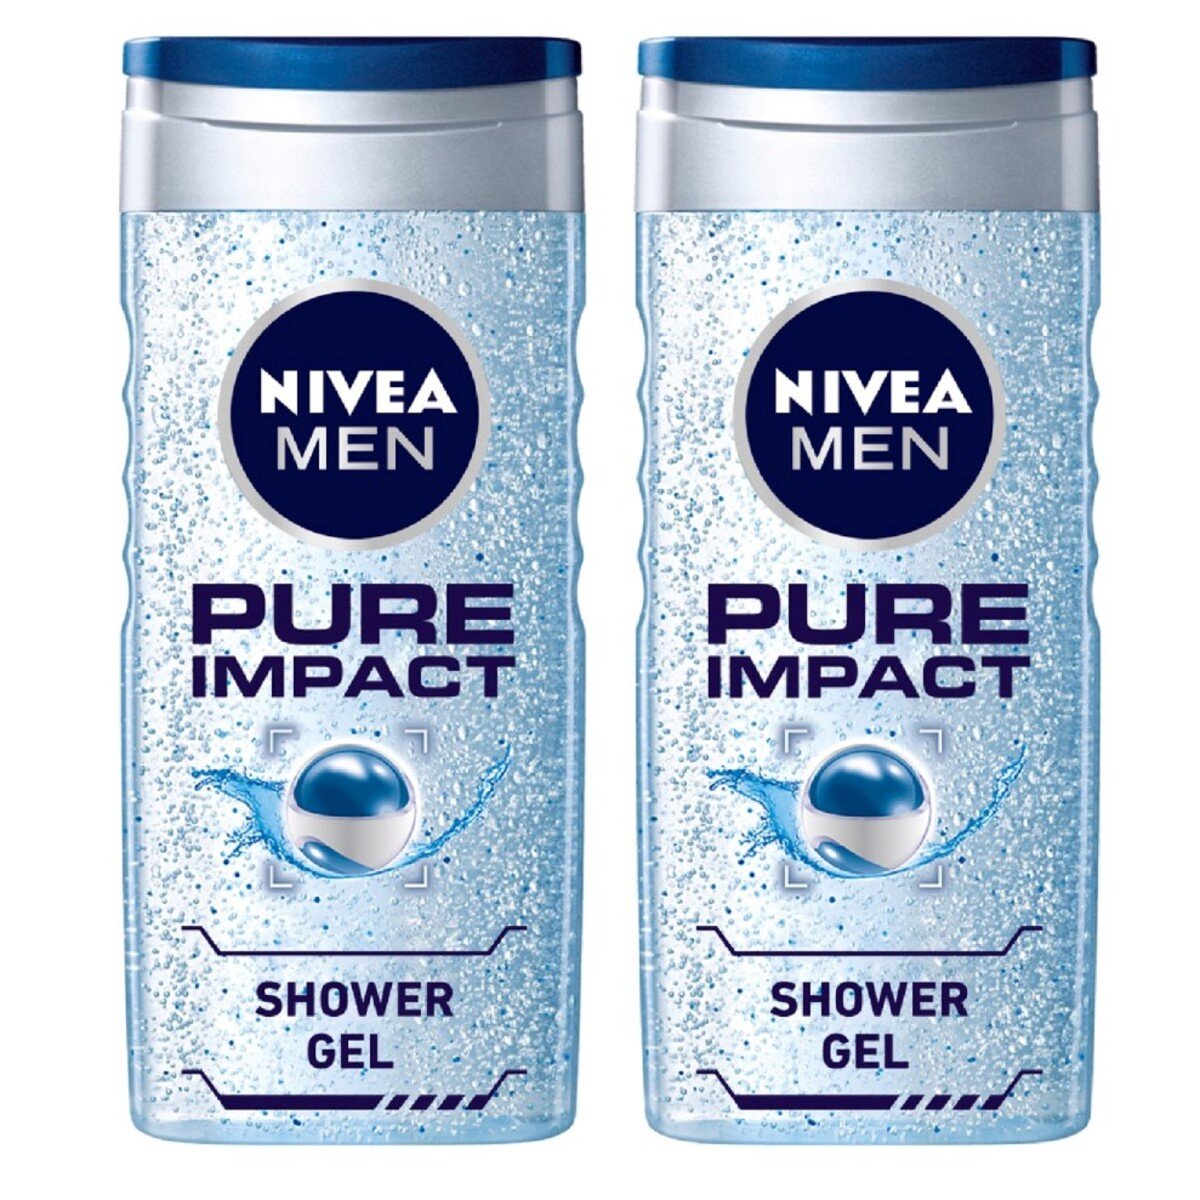 Nivea Men Pure Impact Shower Gel Value Pack 2 x 250 ml